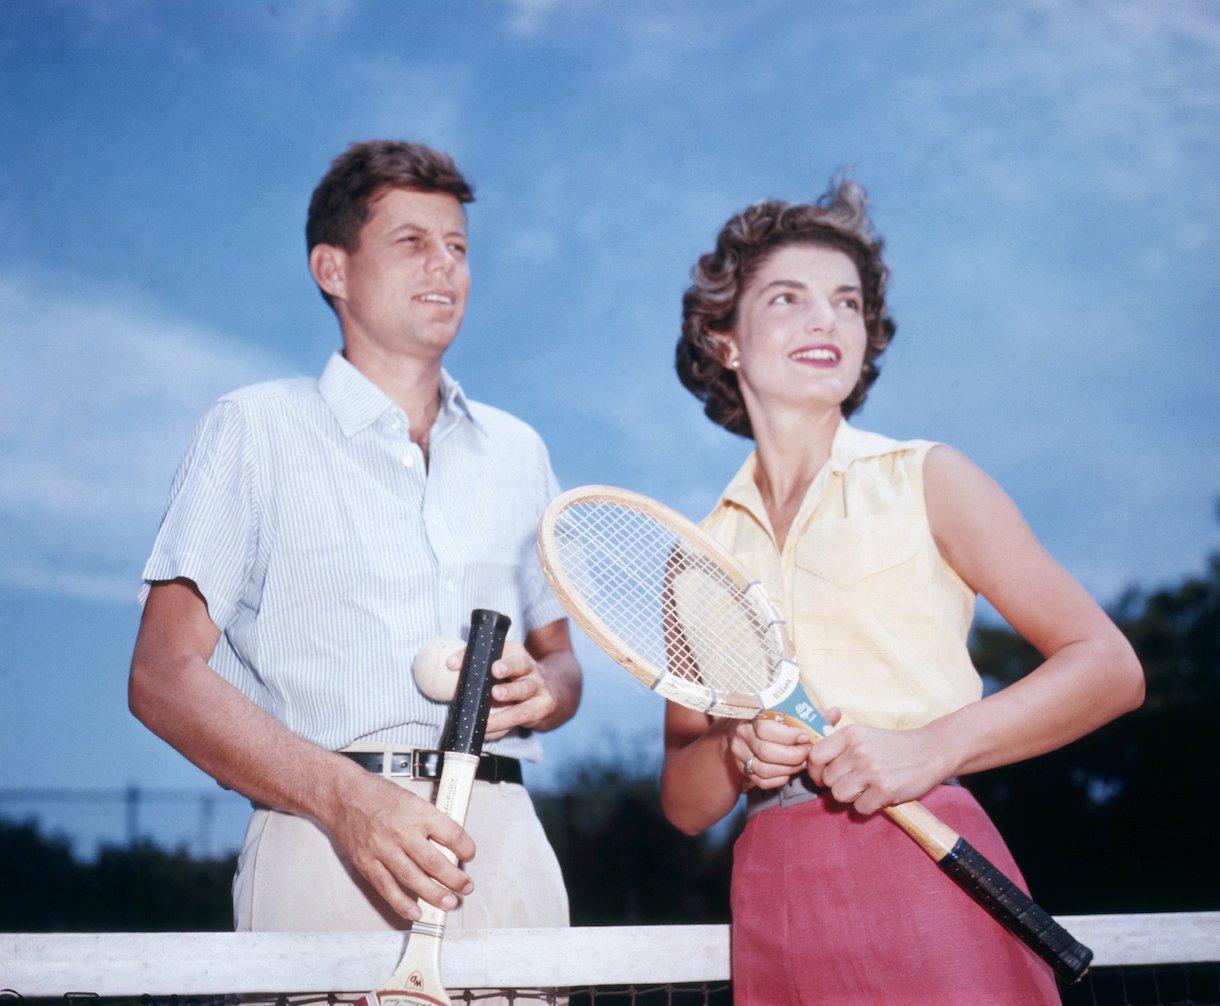 Senator John Kennedy and his fiancee Jacqueline Bouvier play tennis